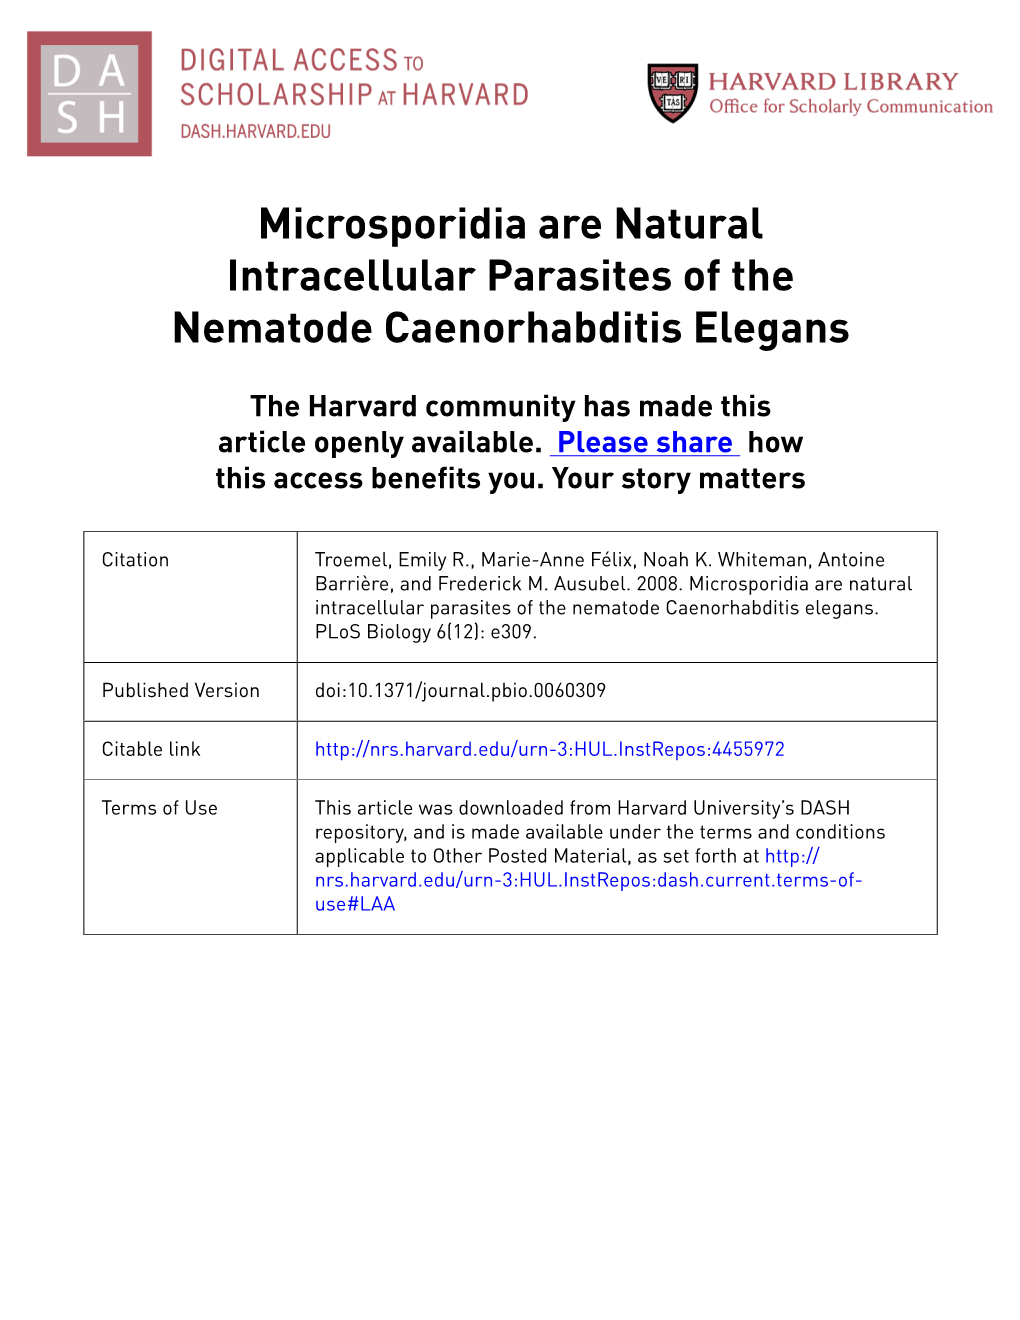 Microsporidia Are Natural Intracellular Parasites of the Nematode Caenorhabditis Elegans